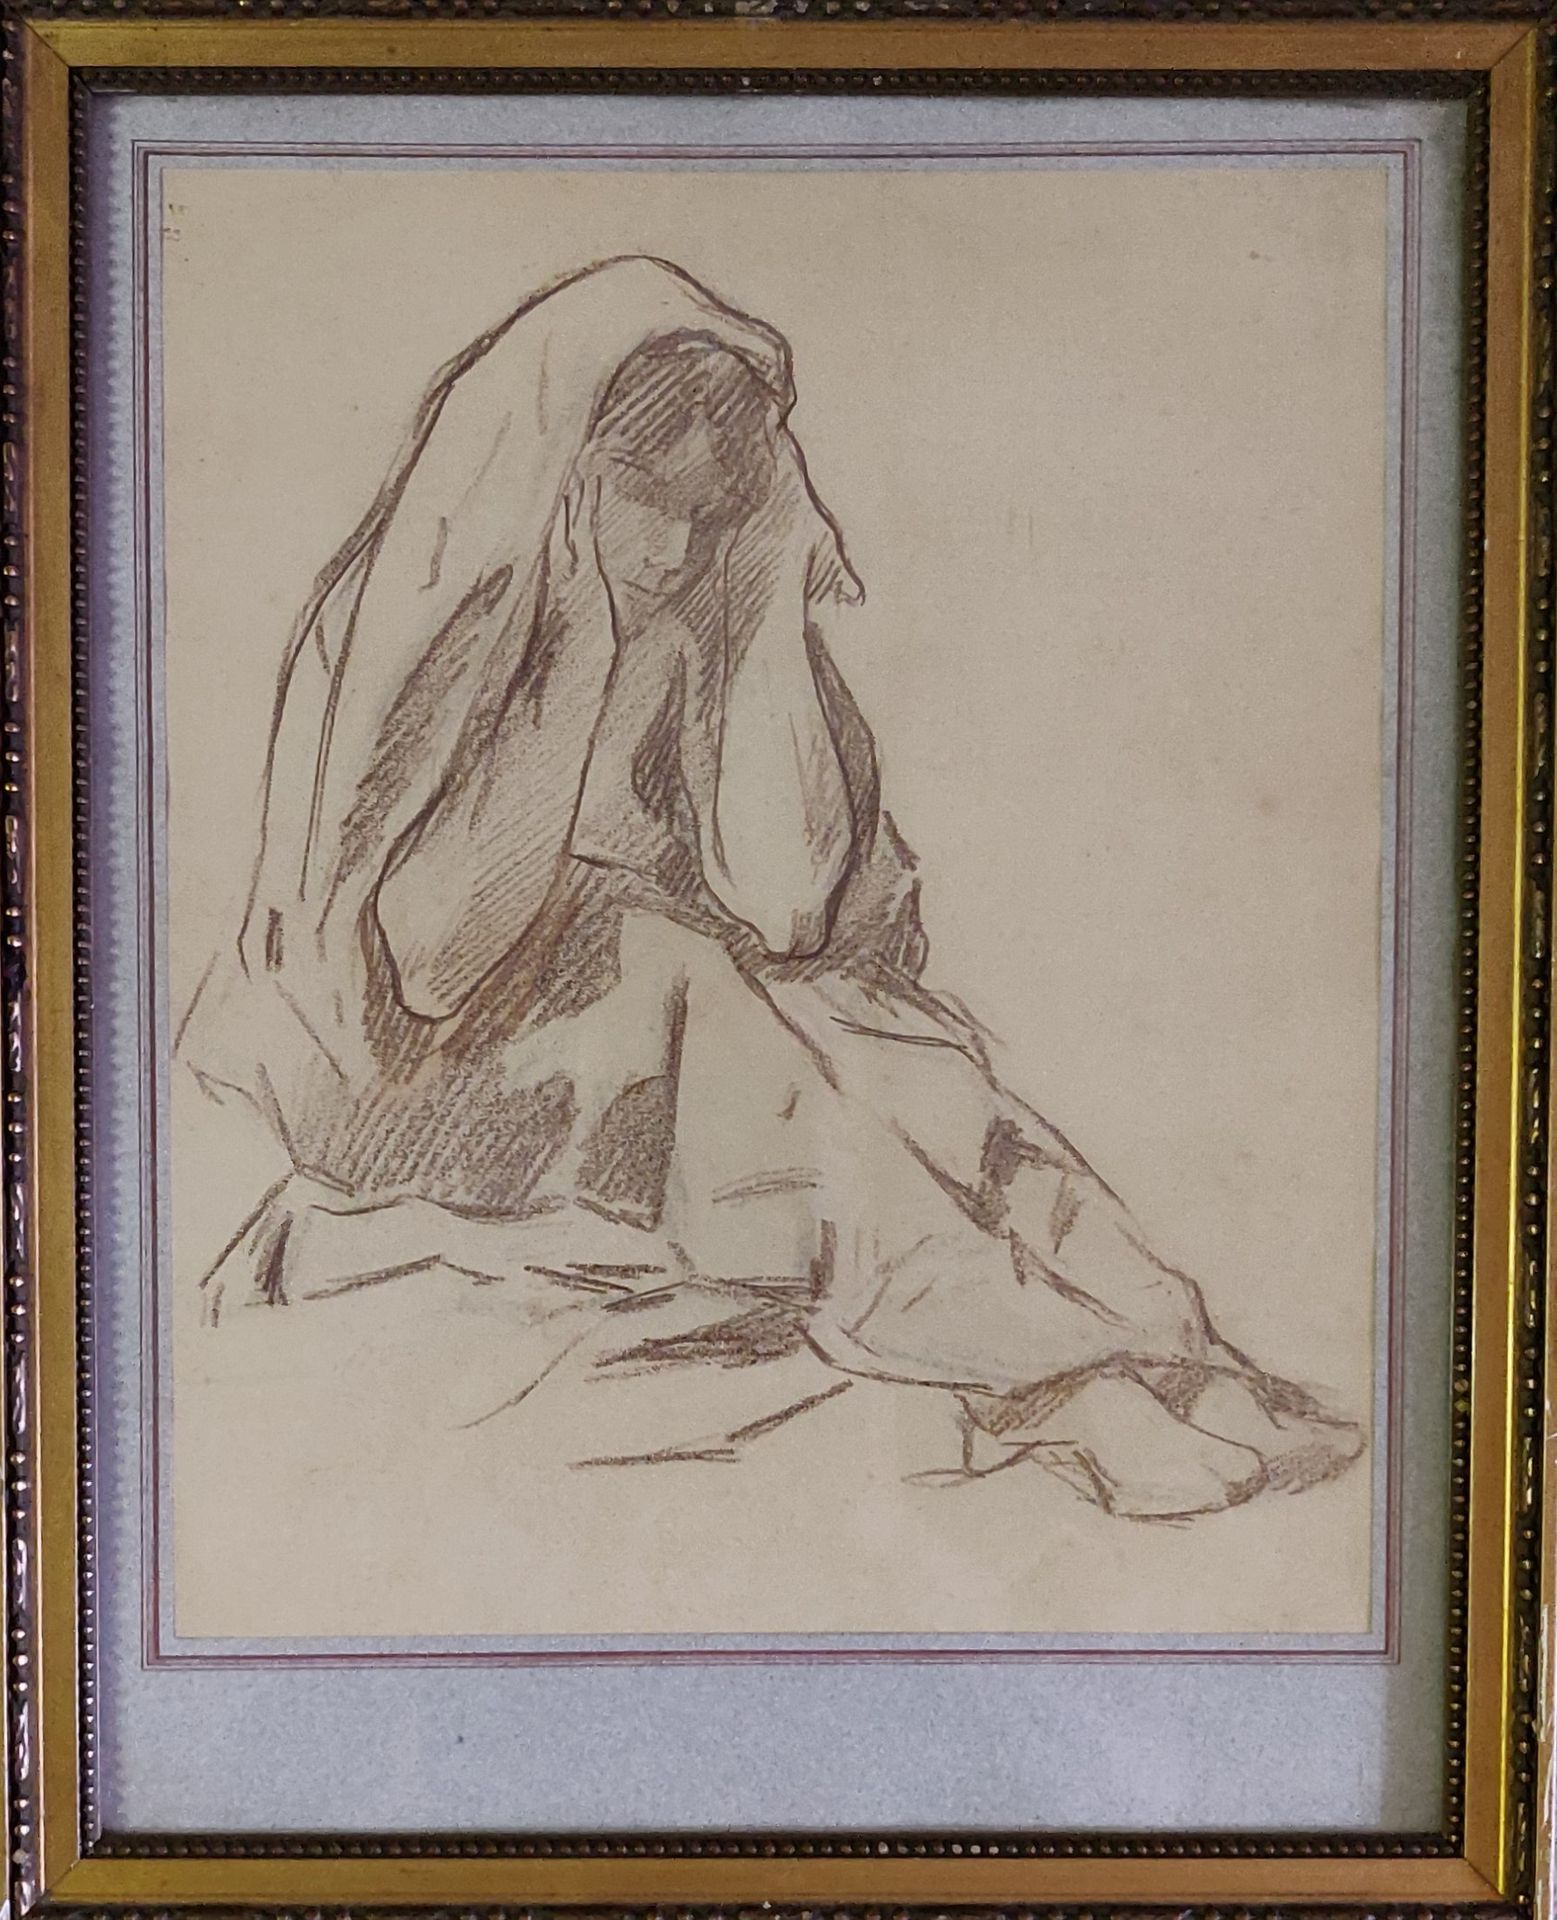 Null Retrato de una joven beduina

Pastel sepia

31 x 26 cm